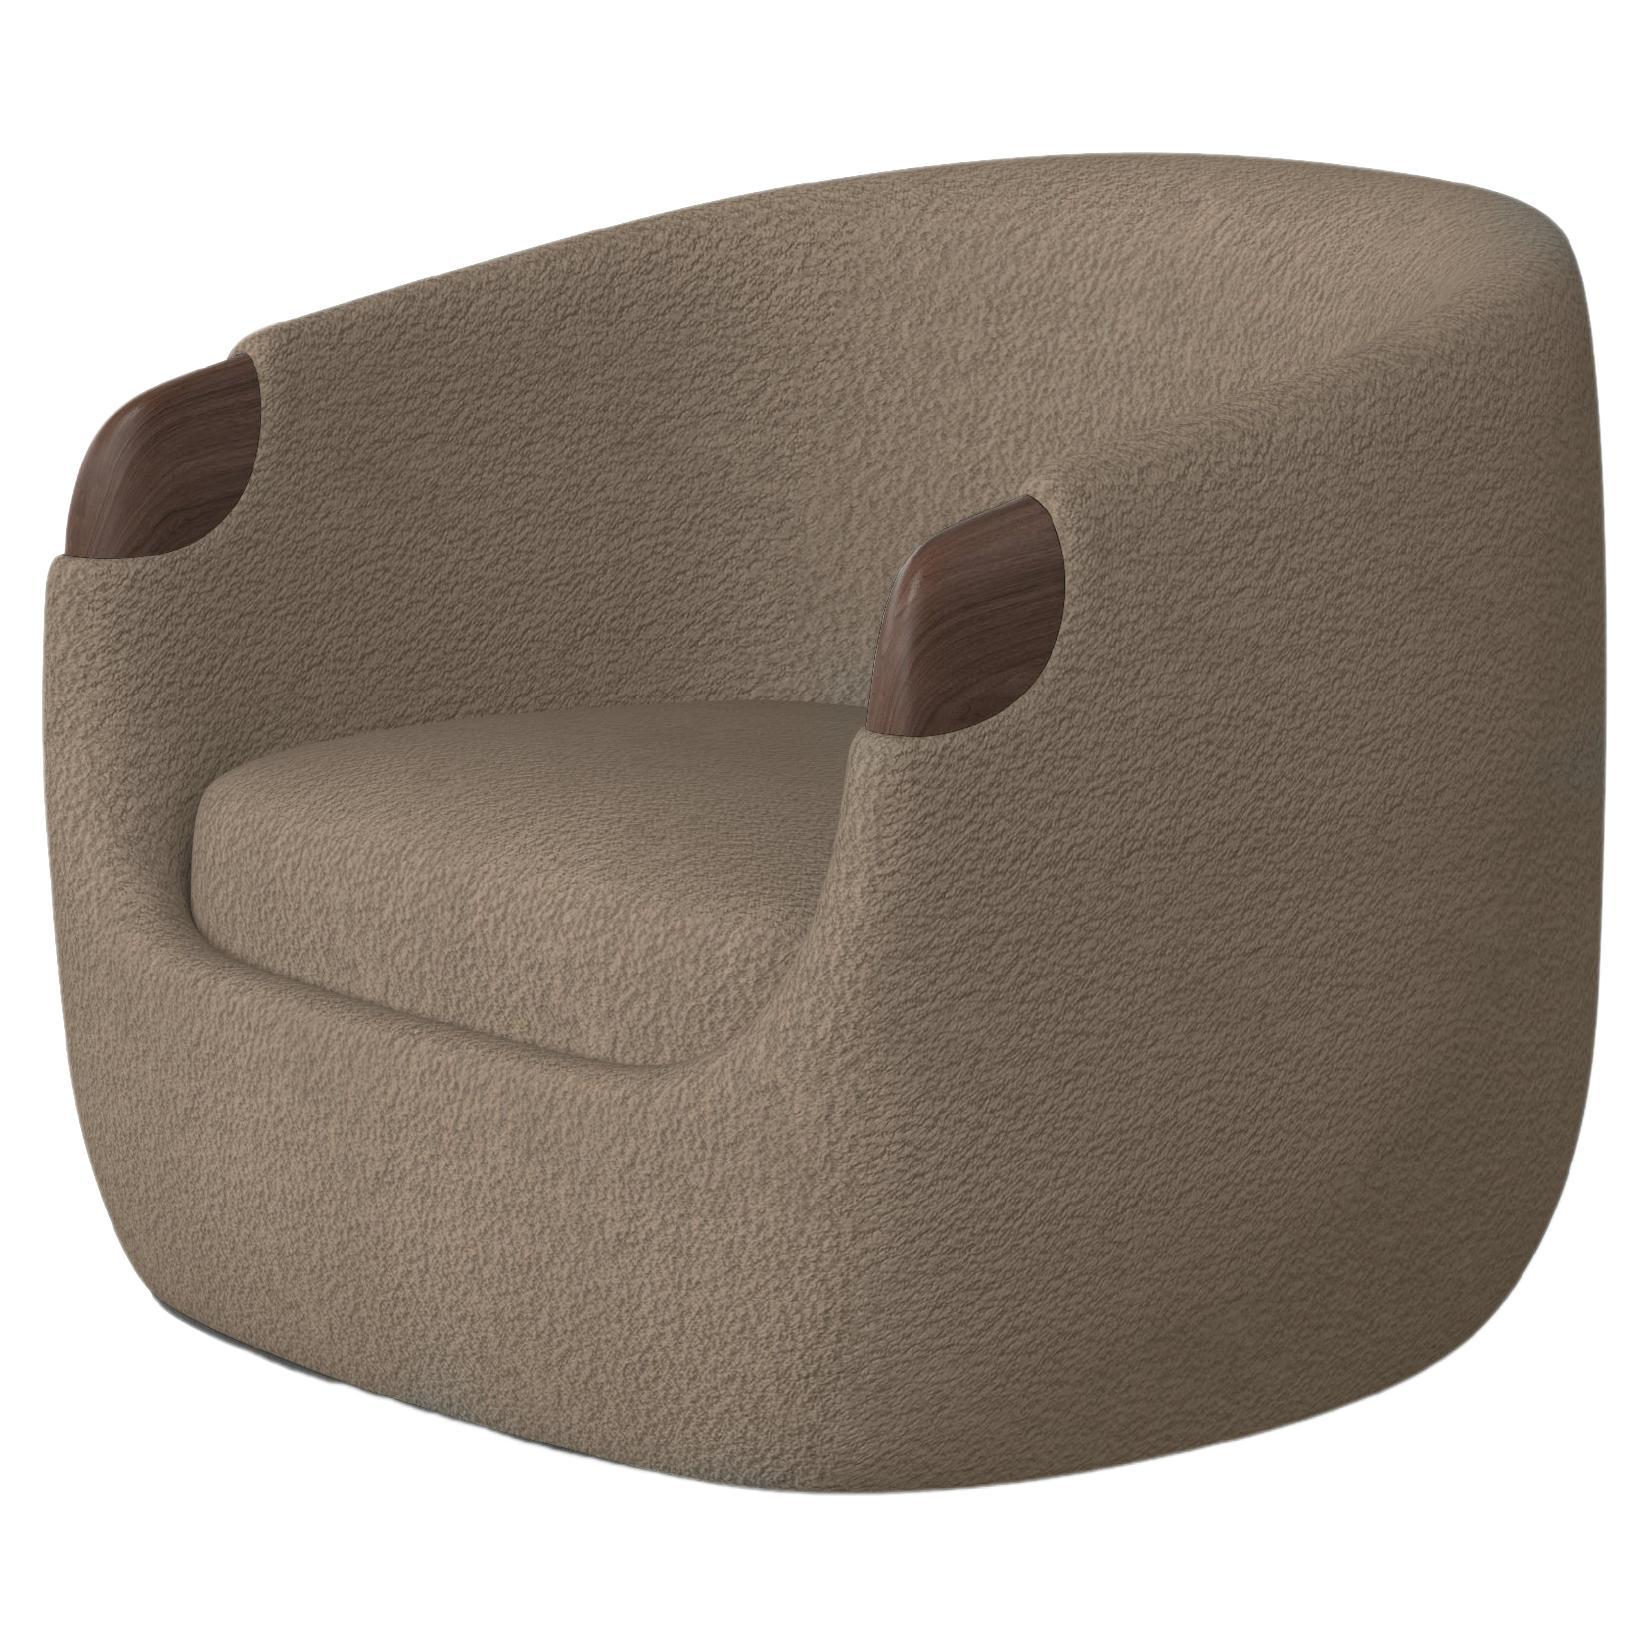 The Moderns Armchair in Brown Boucle and Walnut (Fauteuil bulle moderne en bouclier brun et noyer)